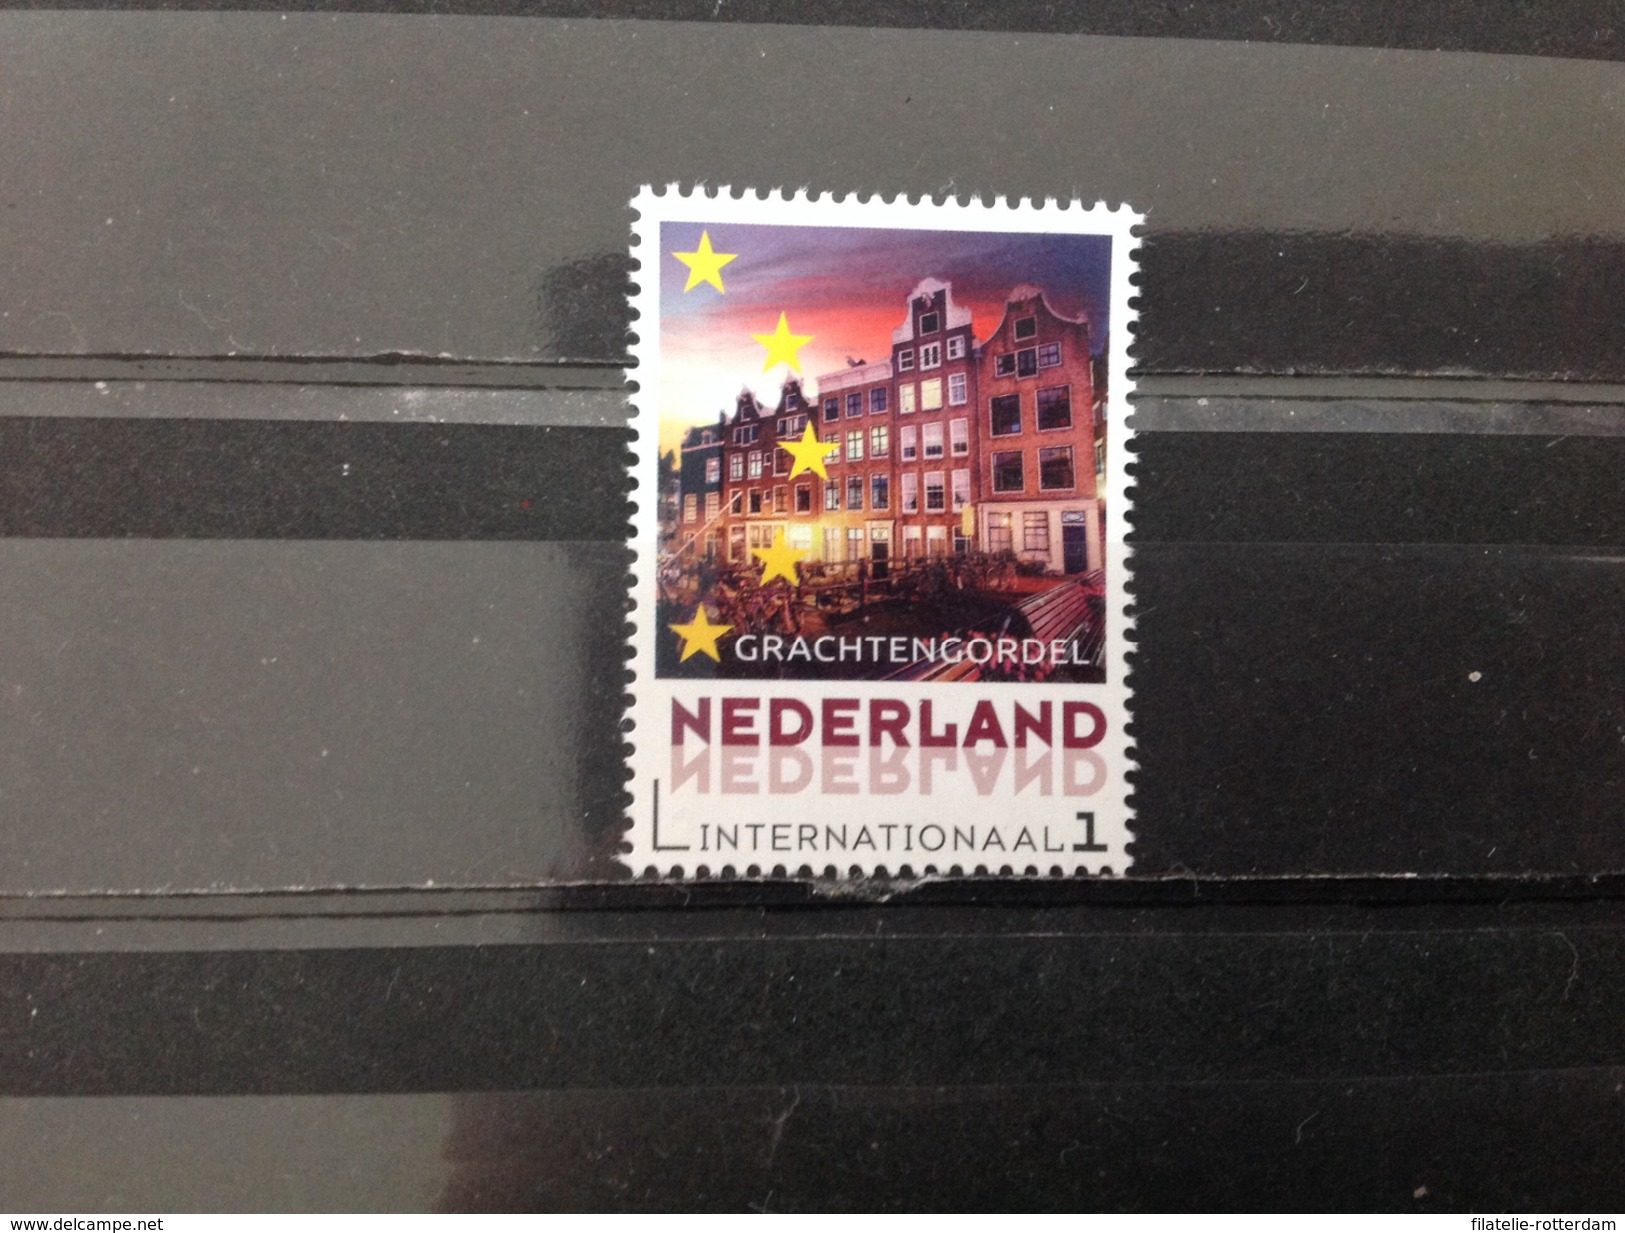 Nederland / The Netherlands - Postfris / MNH - Europazegel Amsterdam, De Grachtengordel 2016 Very Rare! - Nuovi